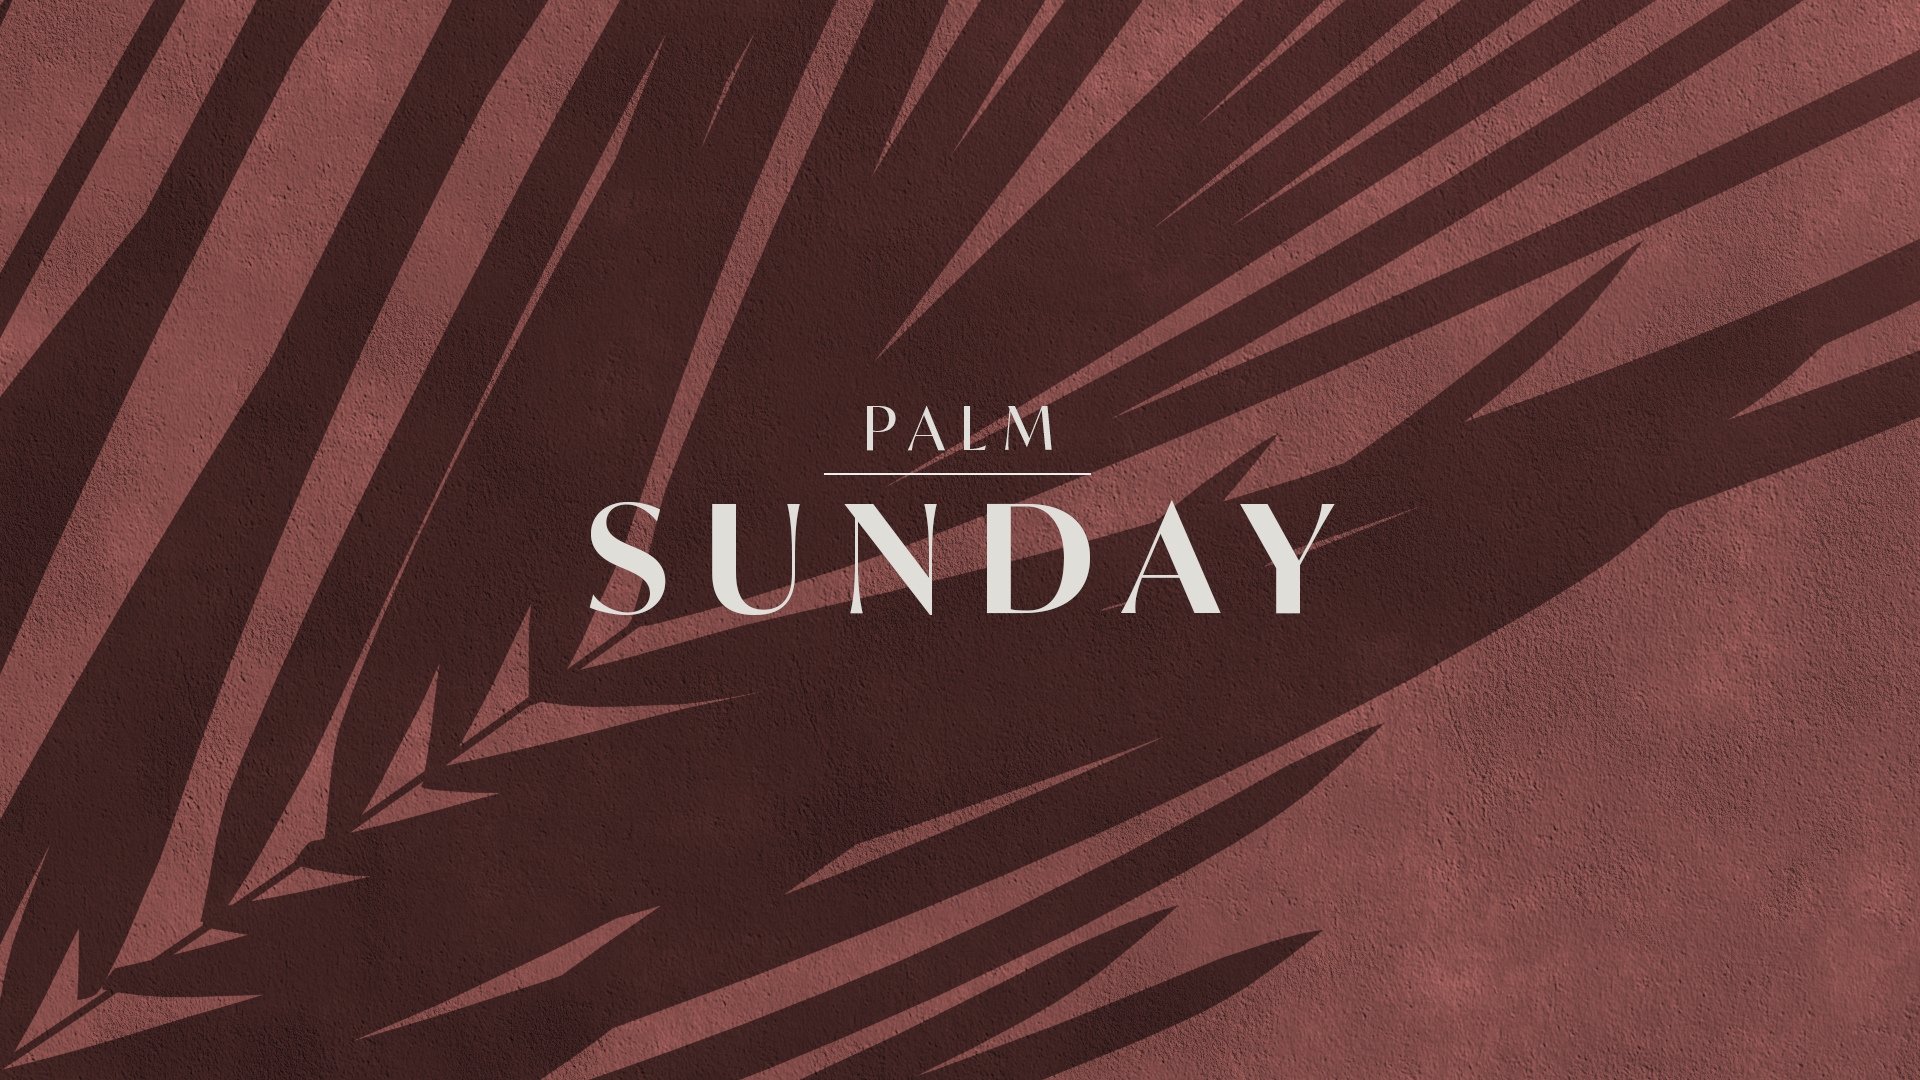 Palm Sunday Slide.jpg